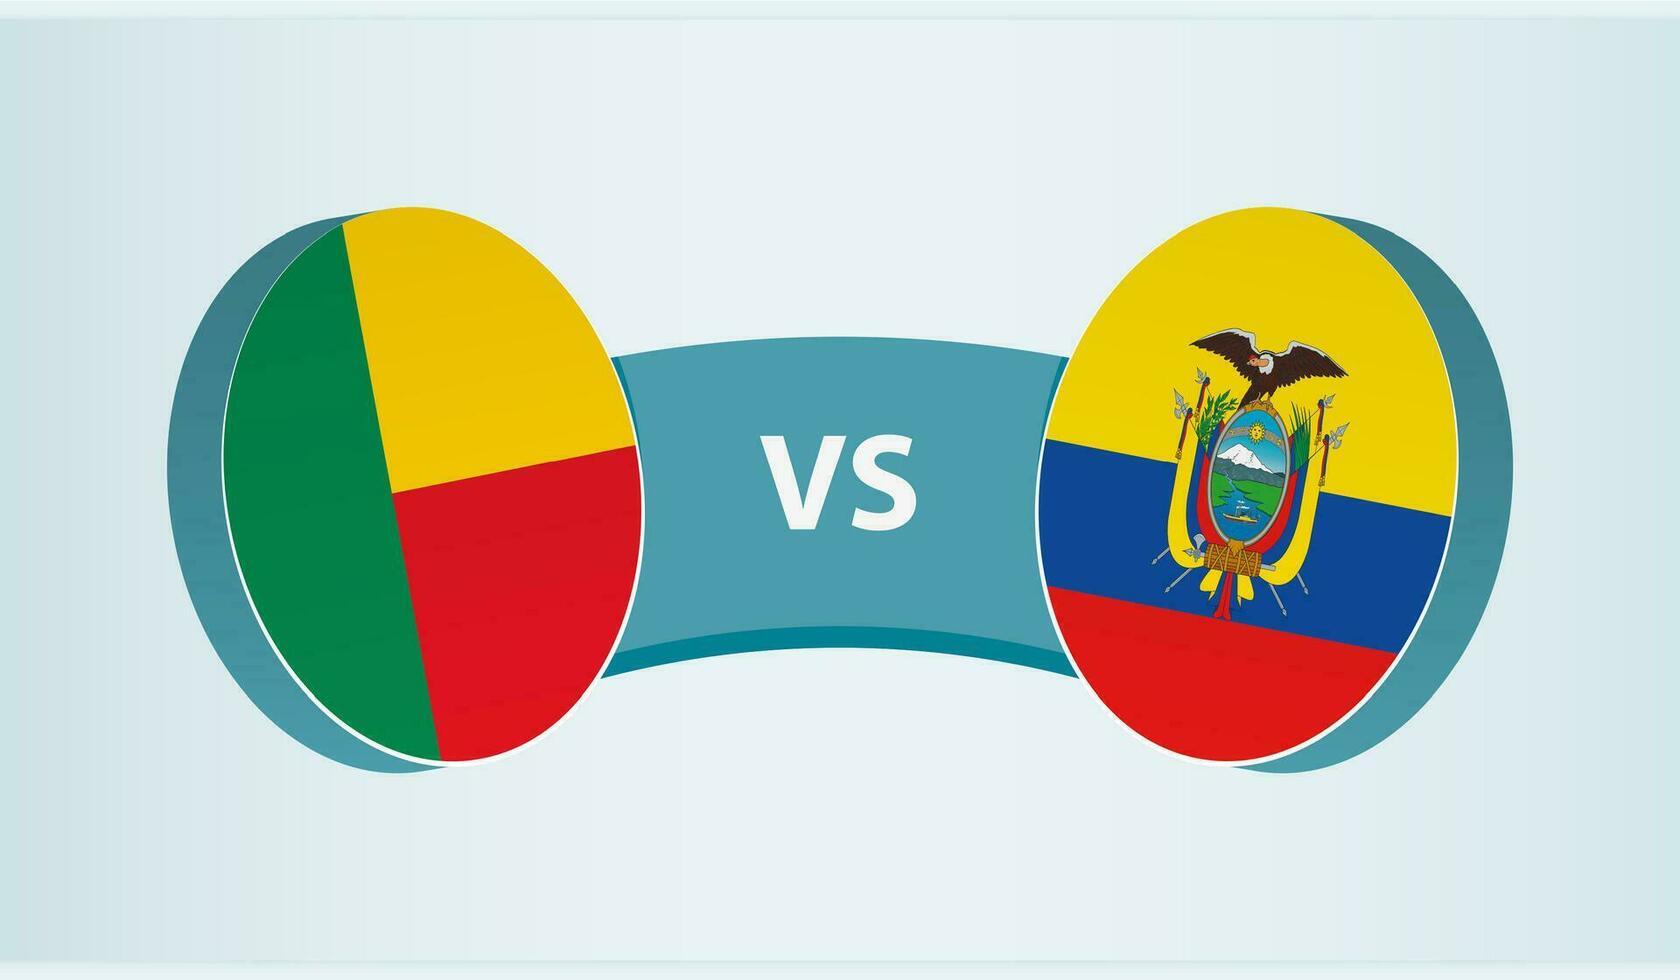 benin versus Equador, equipe Esportes concorrência conceito. vetor